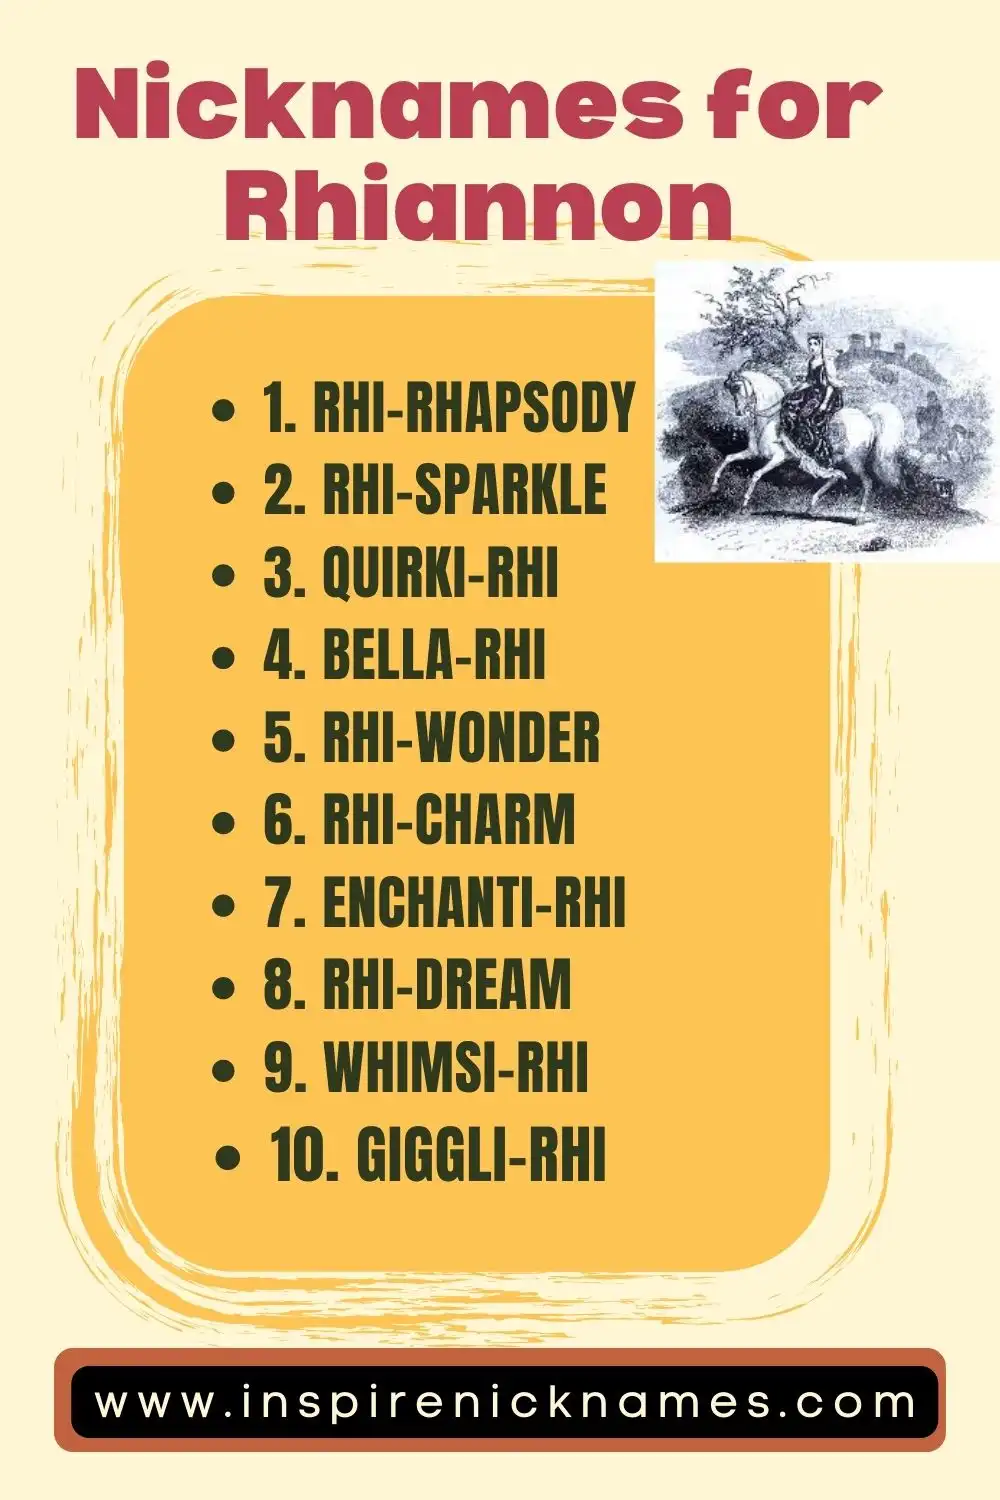 nicknames for Rhiannon list ideas